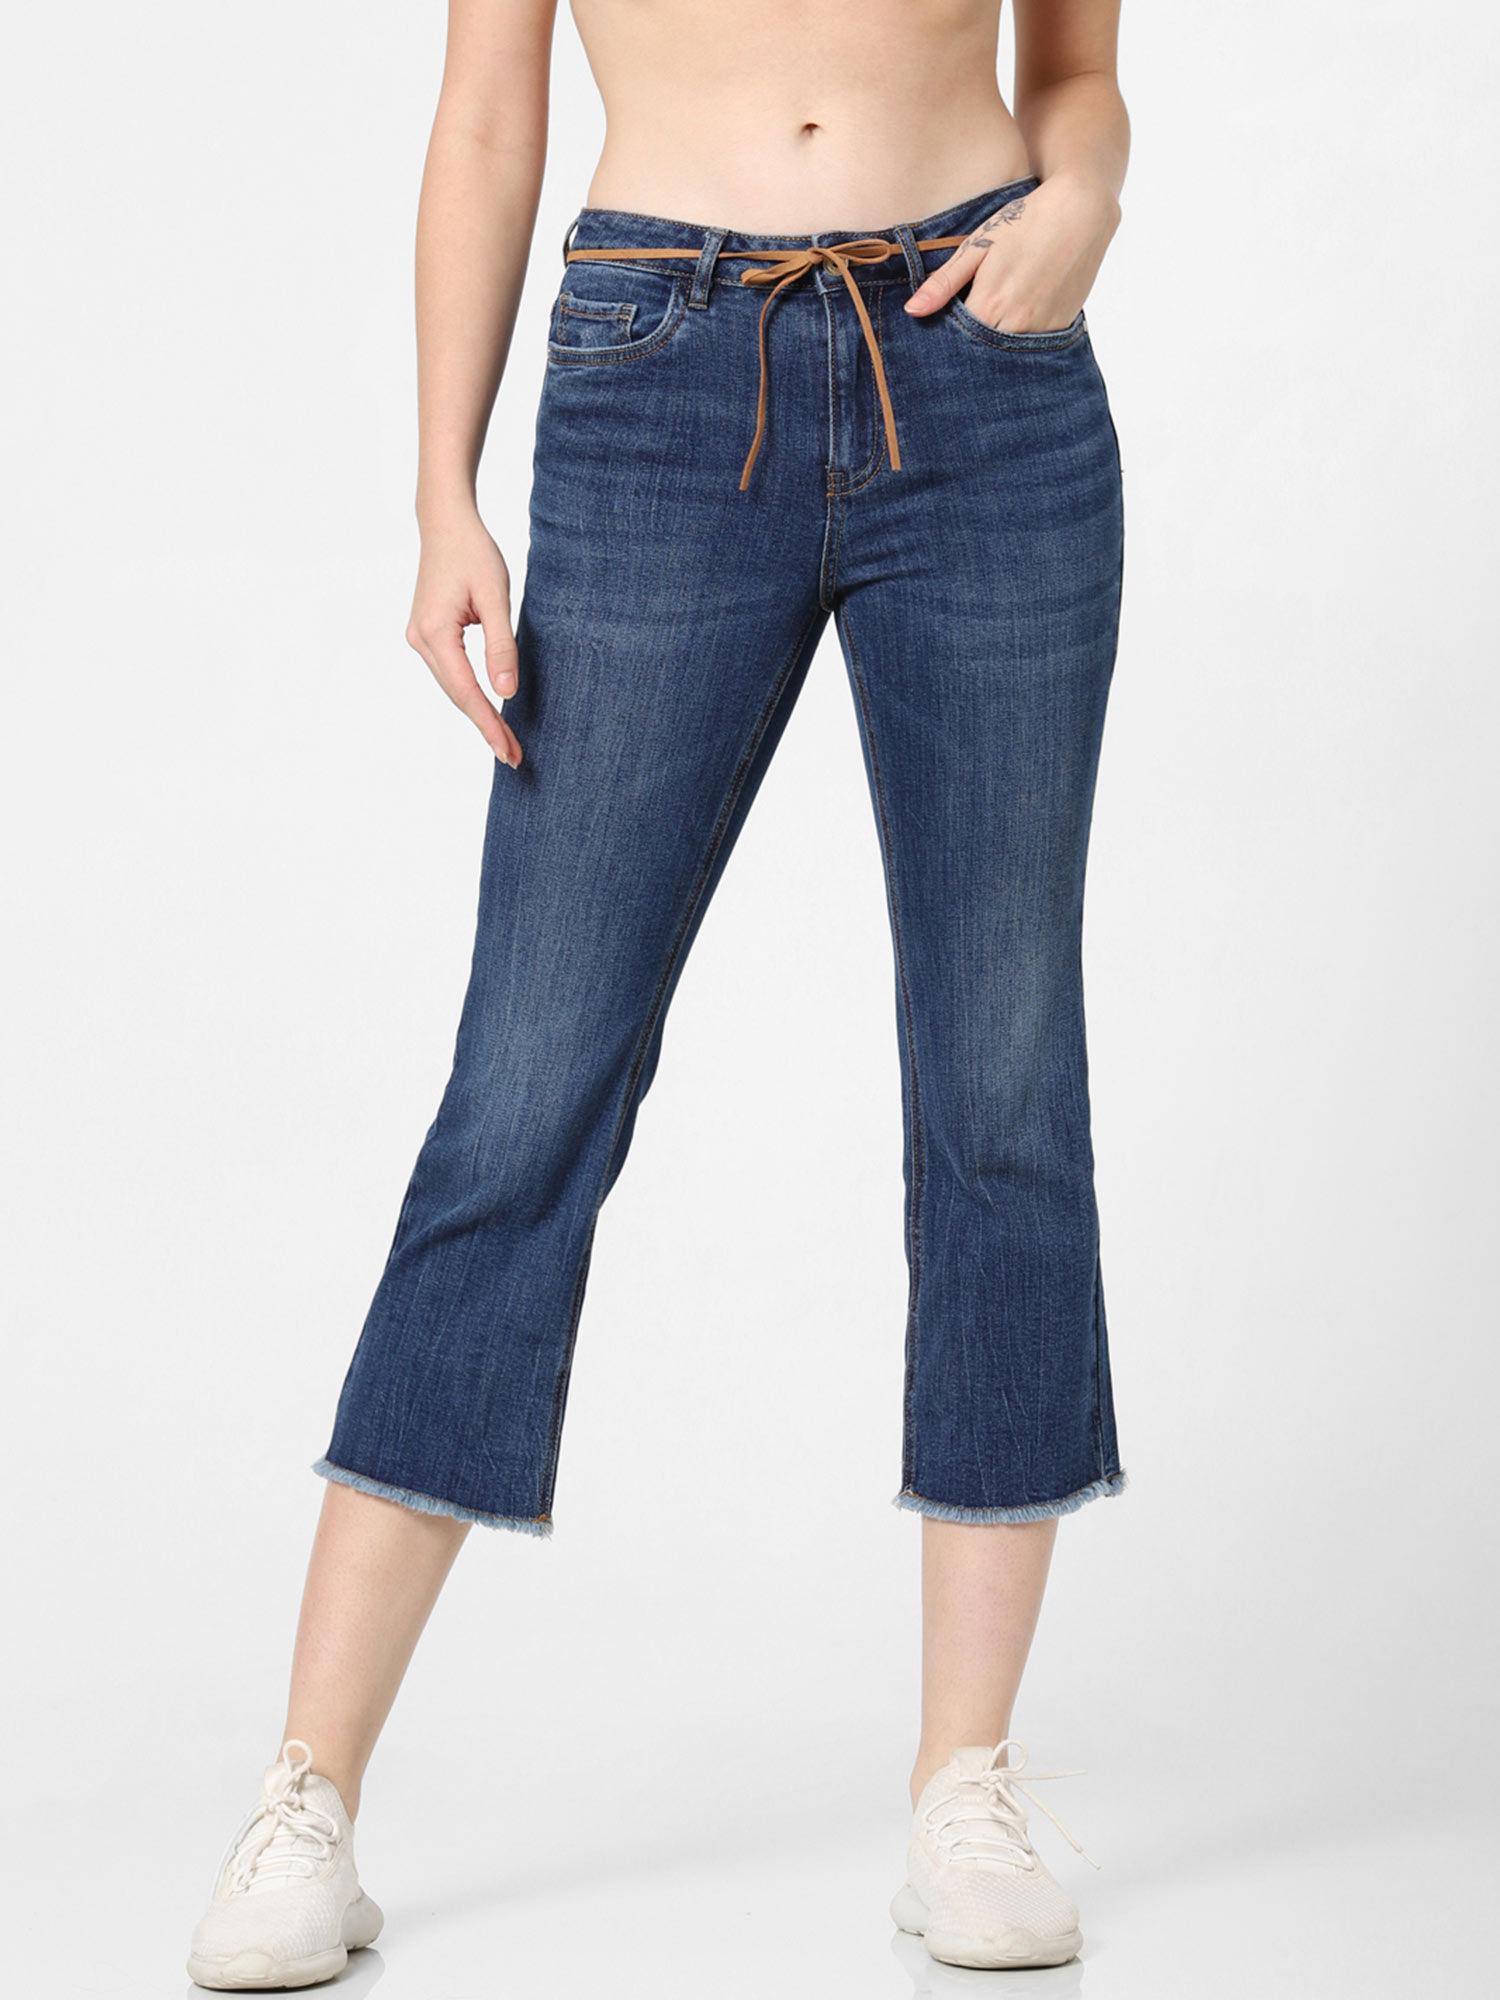 navy blue denim cropped jeans